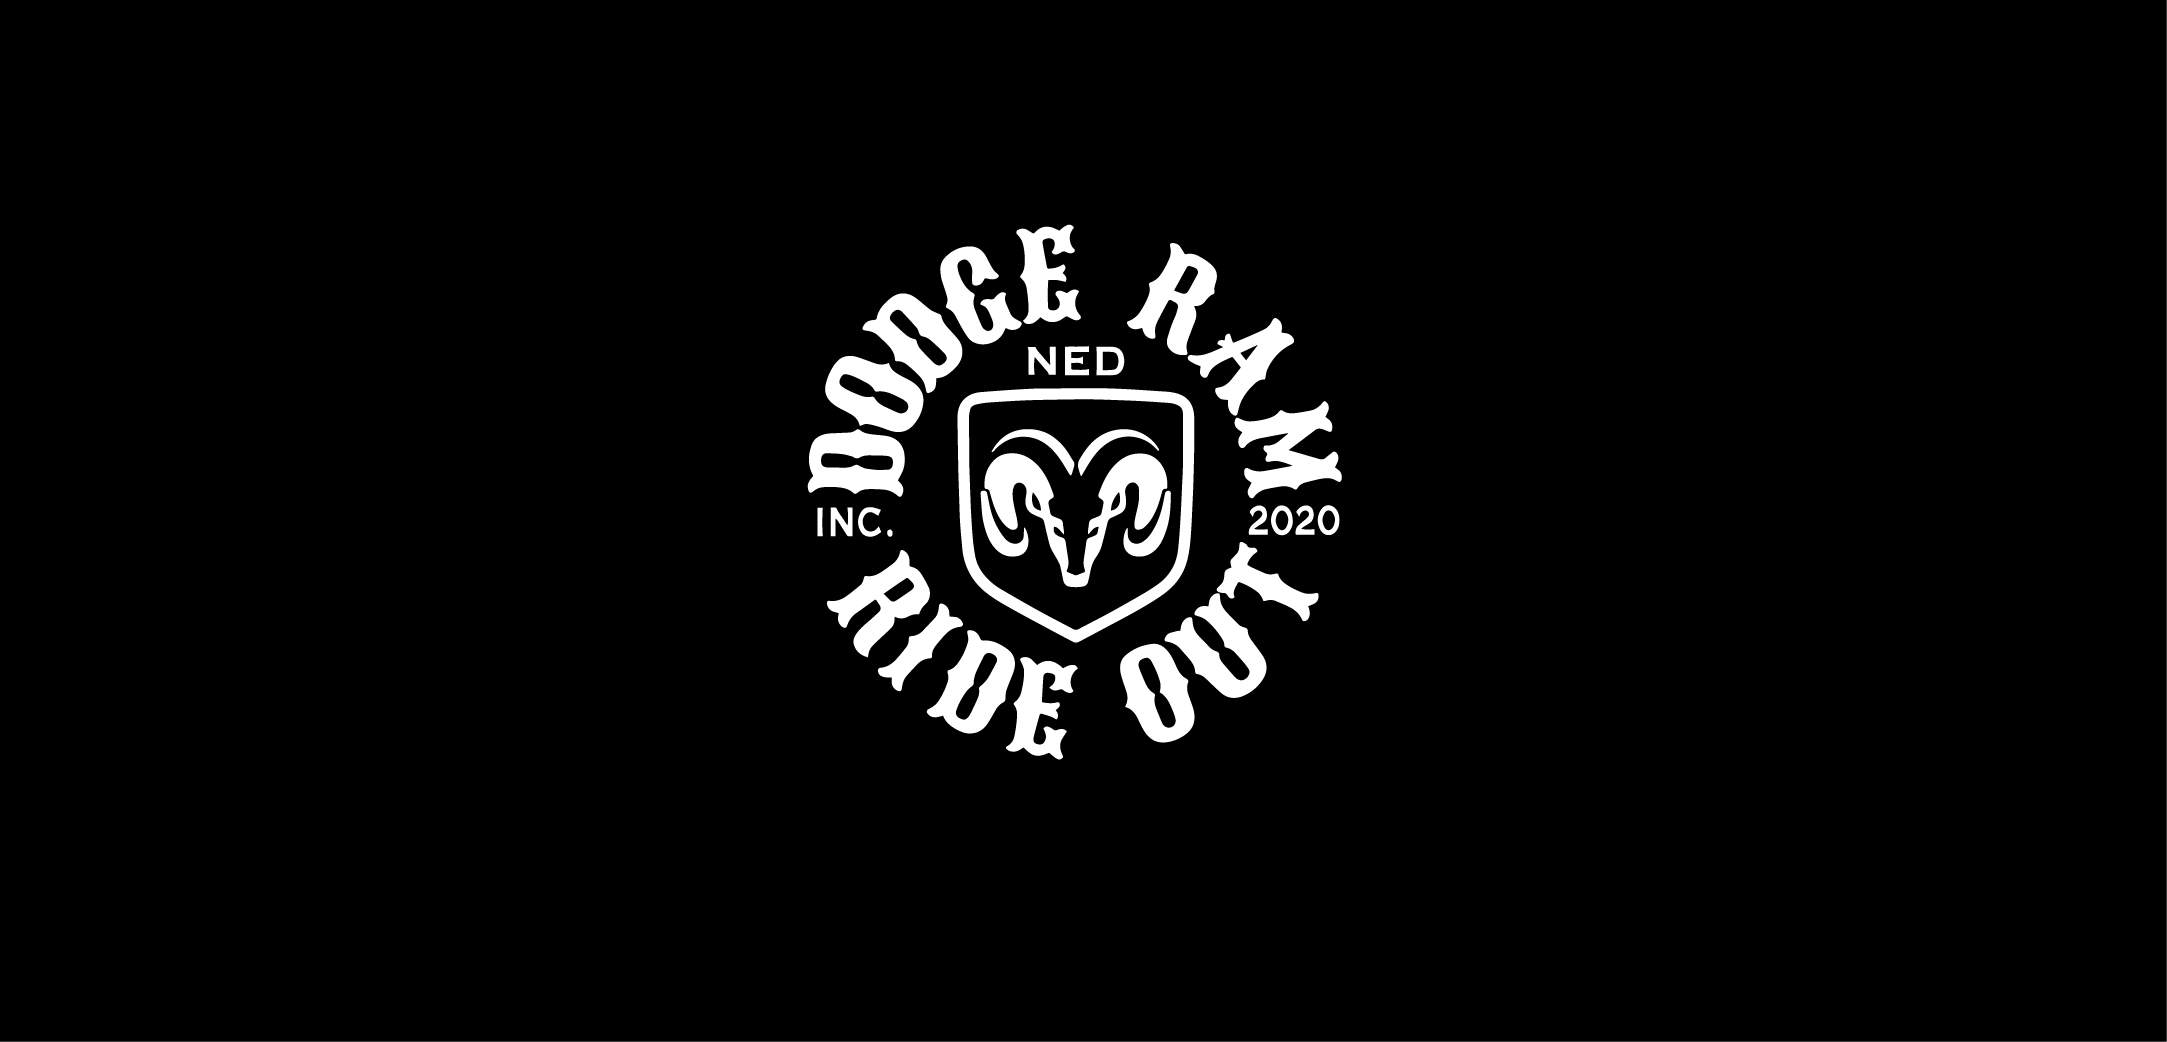 Dodge Ram Ride Out webshop